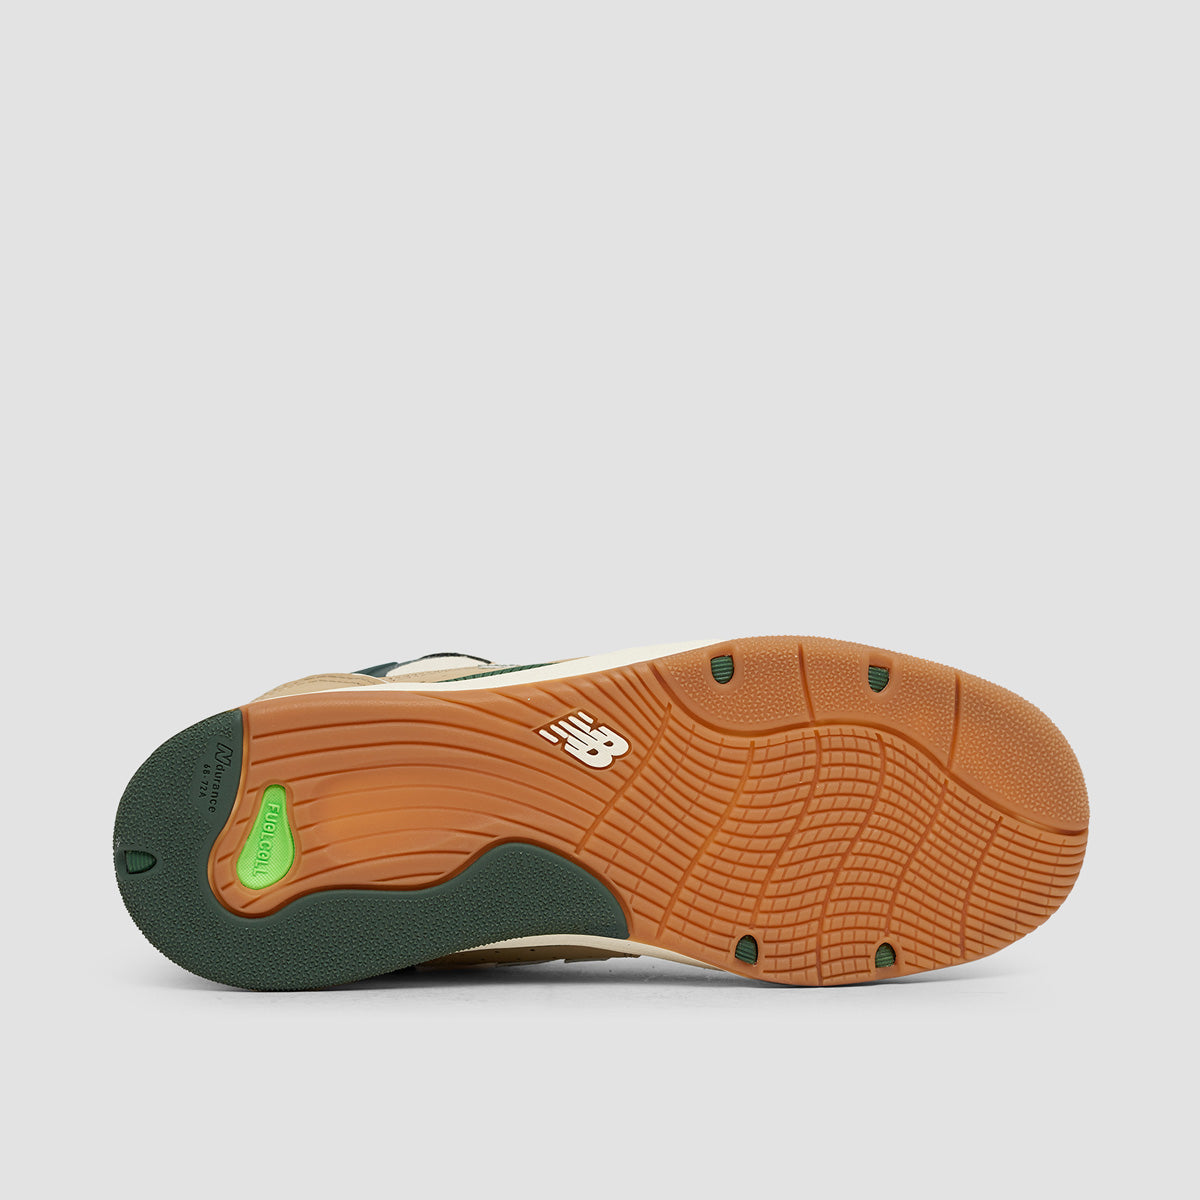 New Balance Tiago Lemos 1010 Shoes - Tan/Forest Green